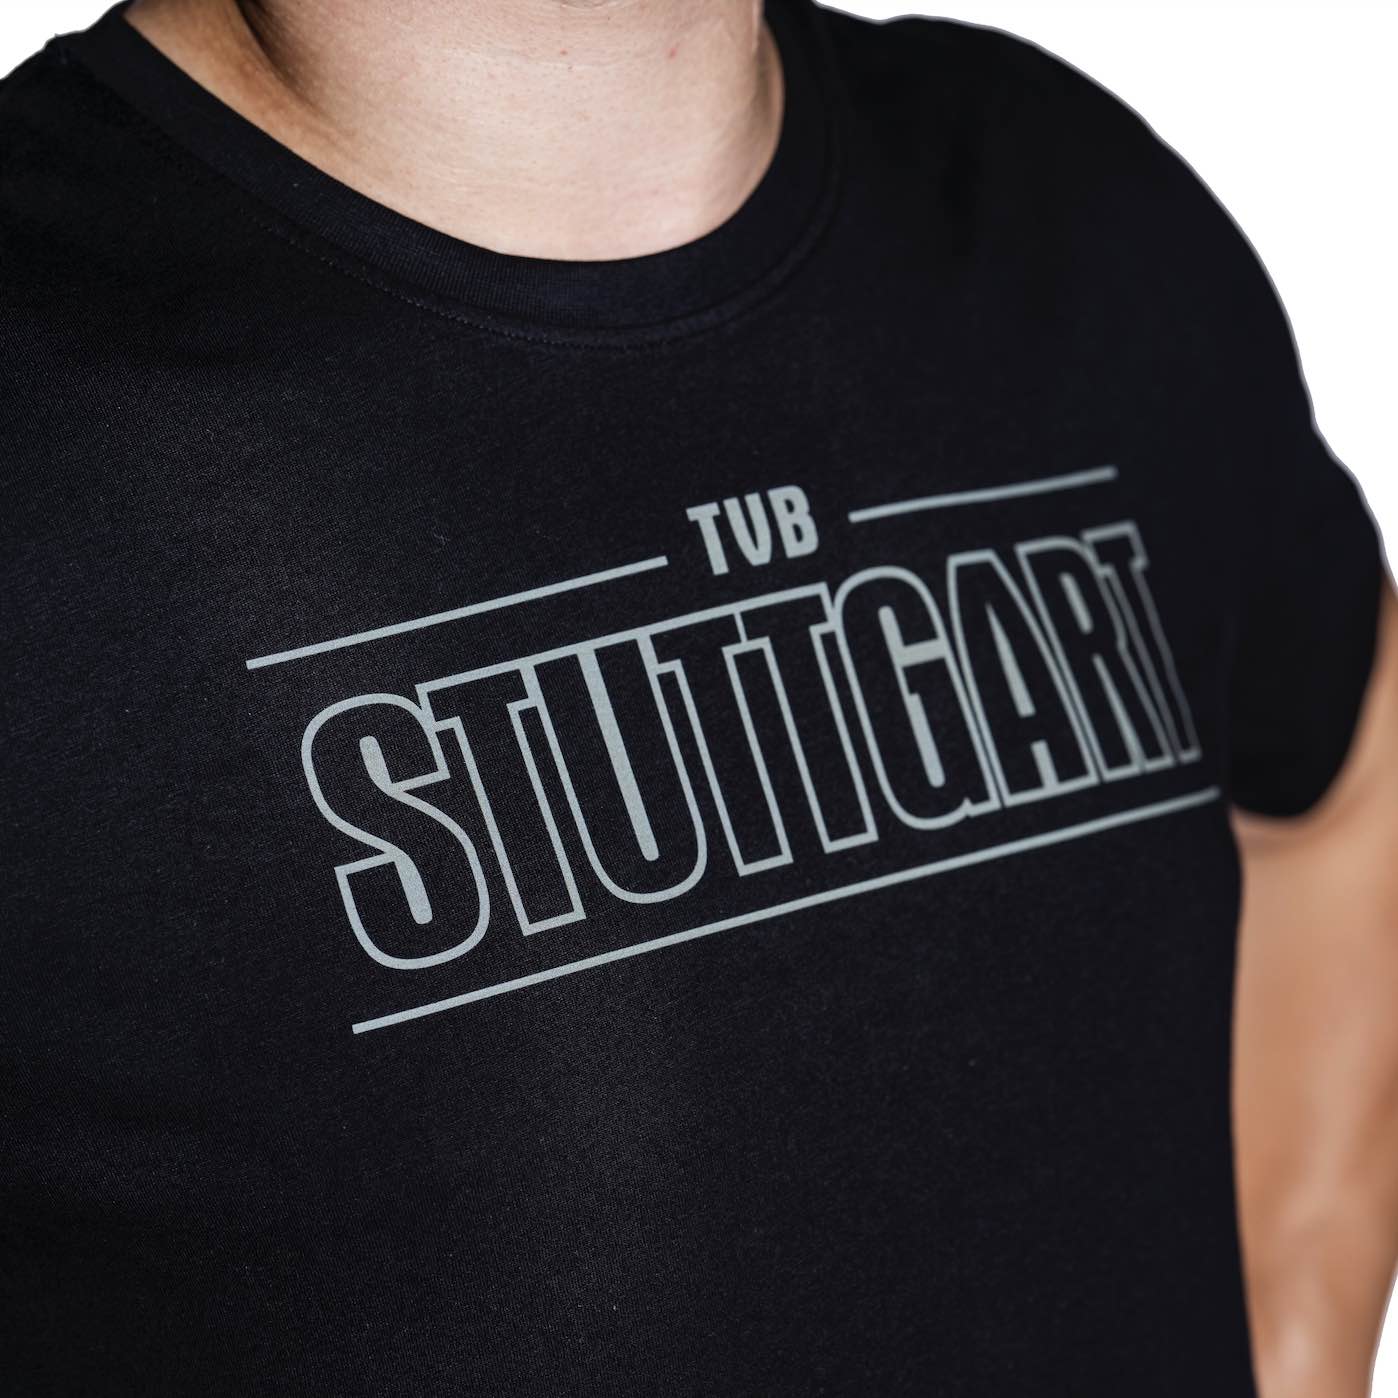 – Stuttgart TVB T-Shirt hummel schwarz Stuttgart TVB